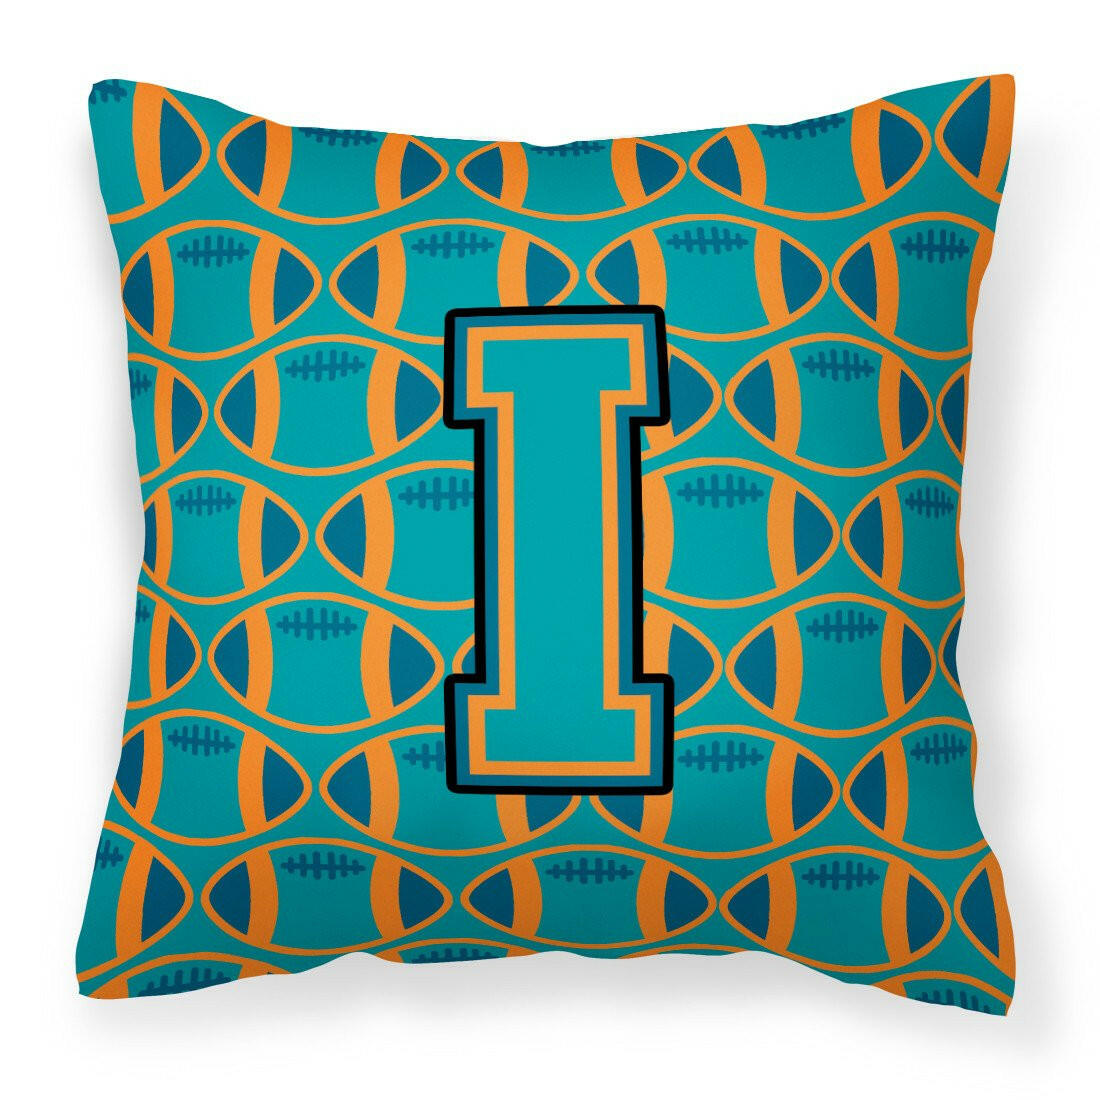 Letter I Football Aqua, Orange and Marine Blue Fabric Decorative Pillow CJ1063-IPW1414 by Caroline's Treasures